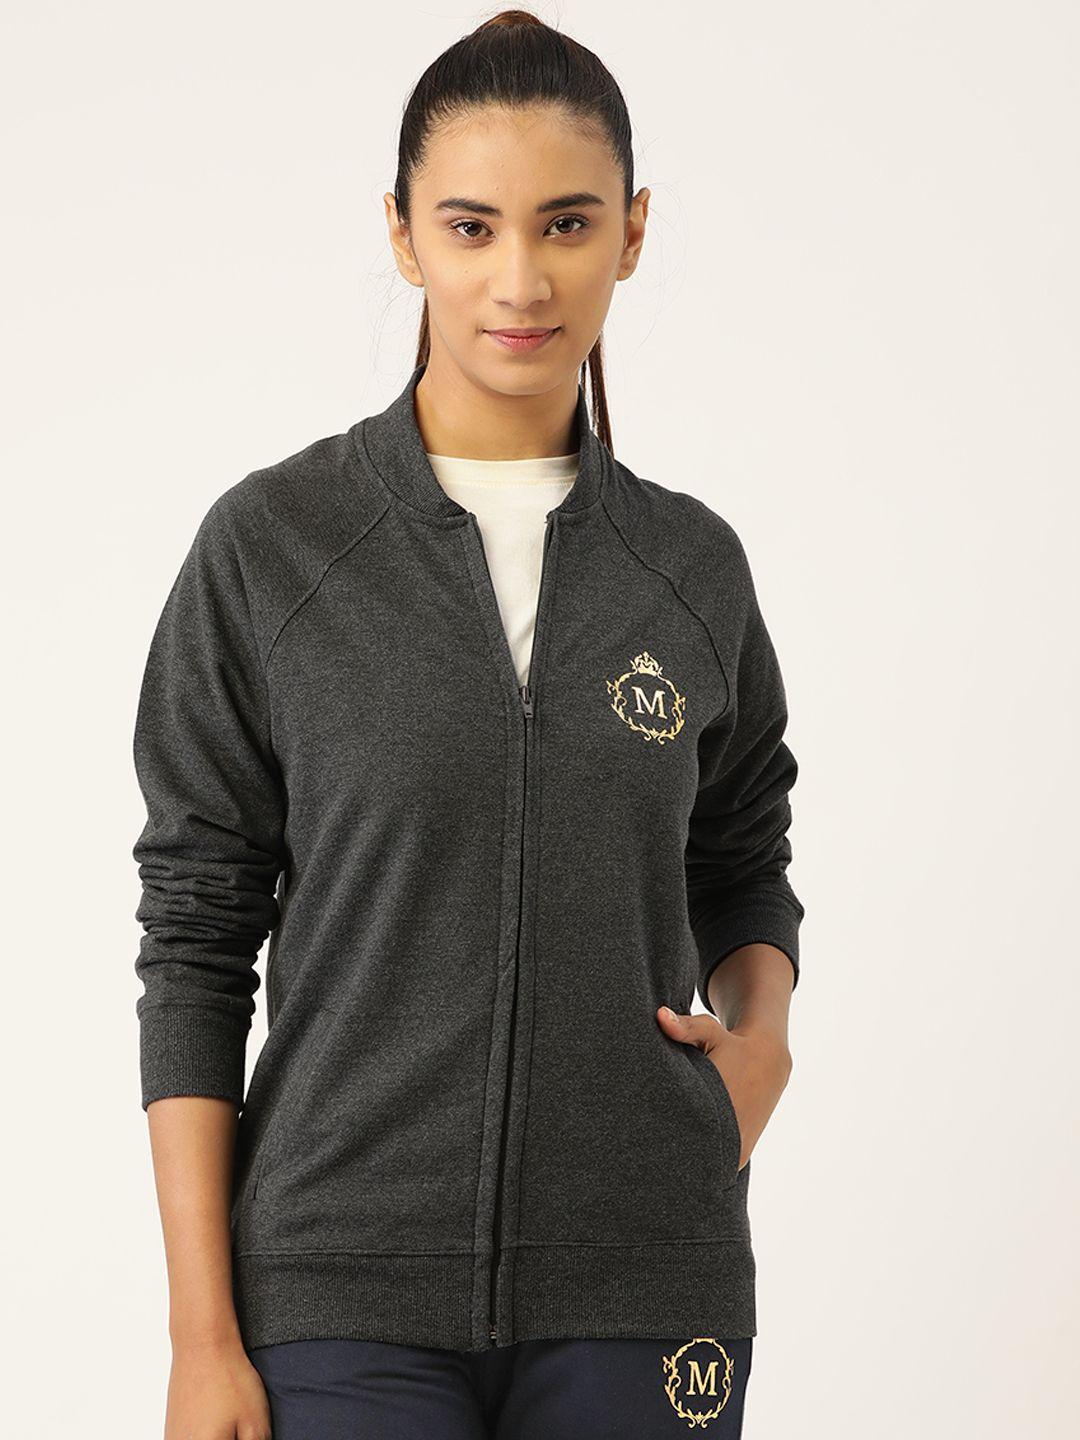 mabish by sonal jain women charcoal grey & golden cotton brand logo printed sweatshirt